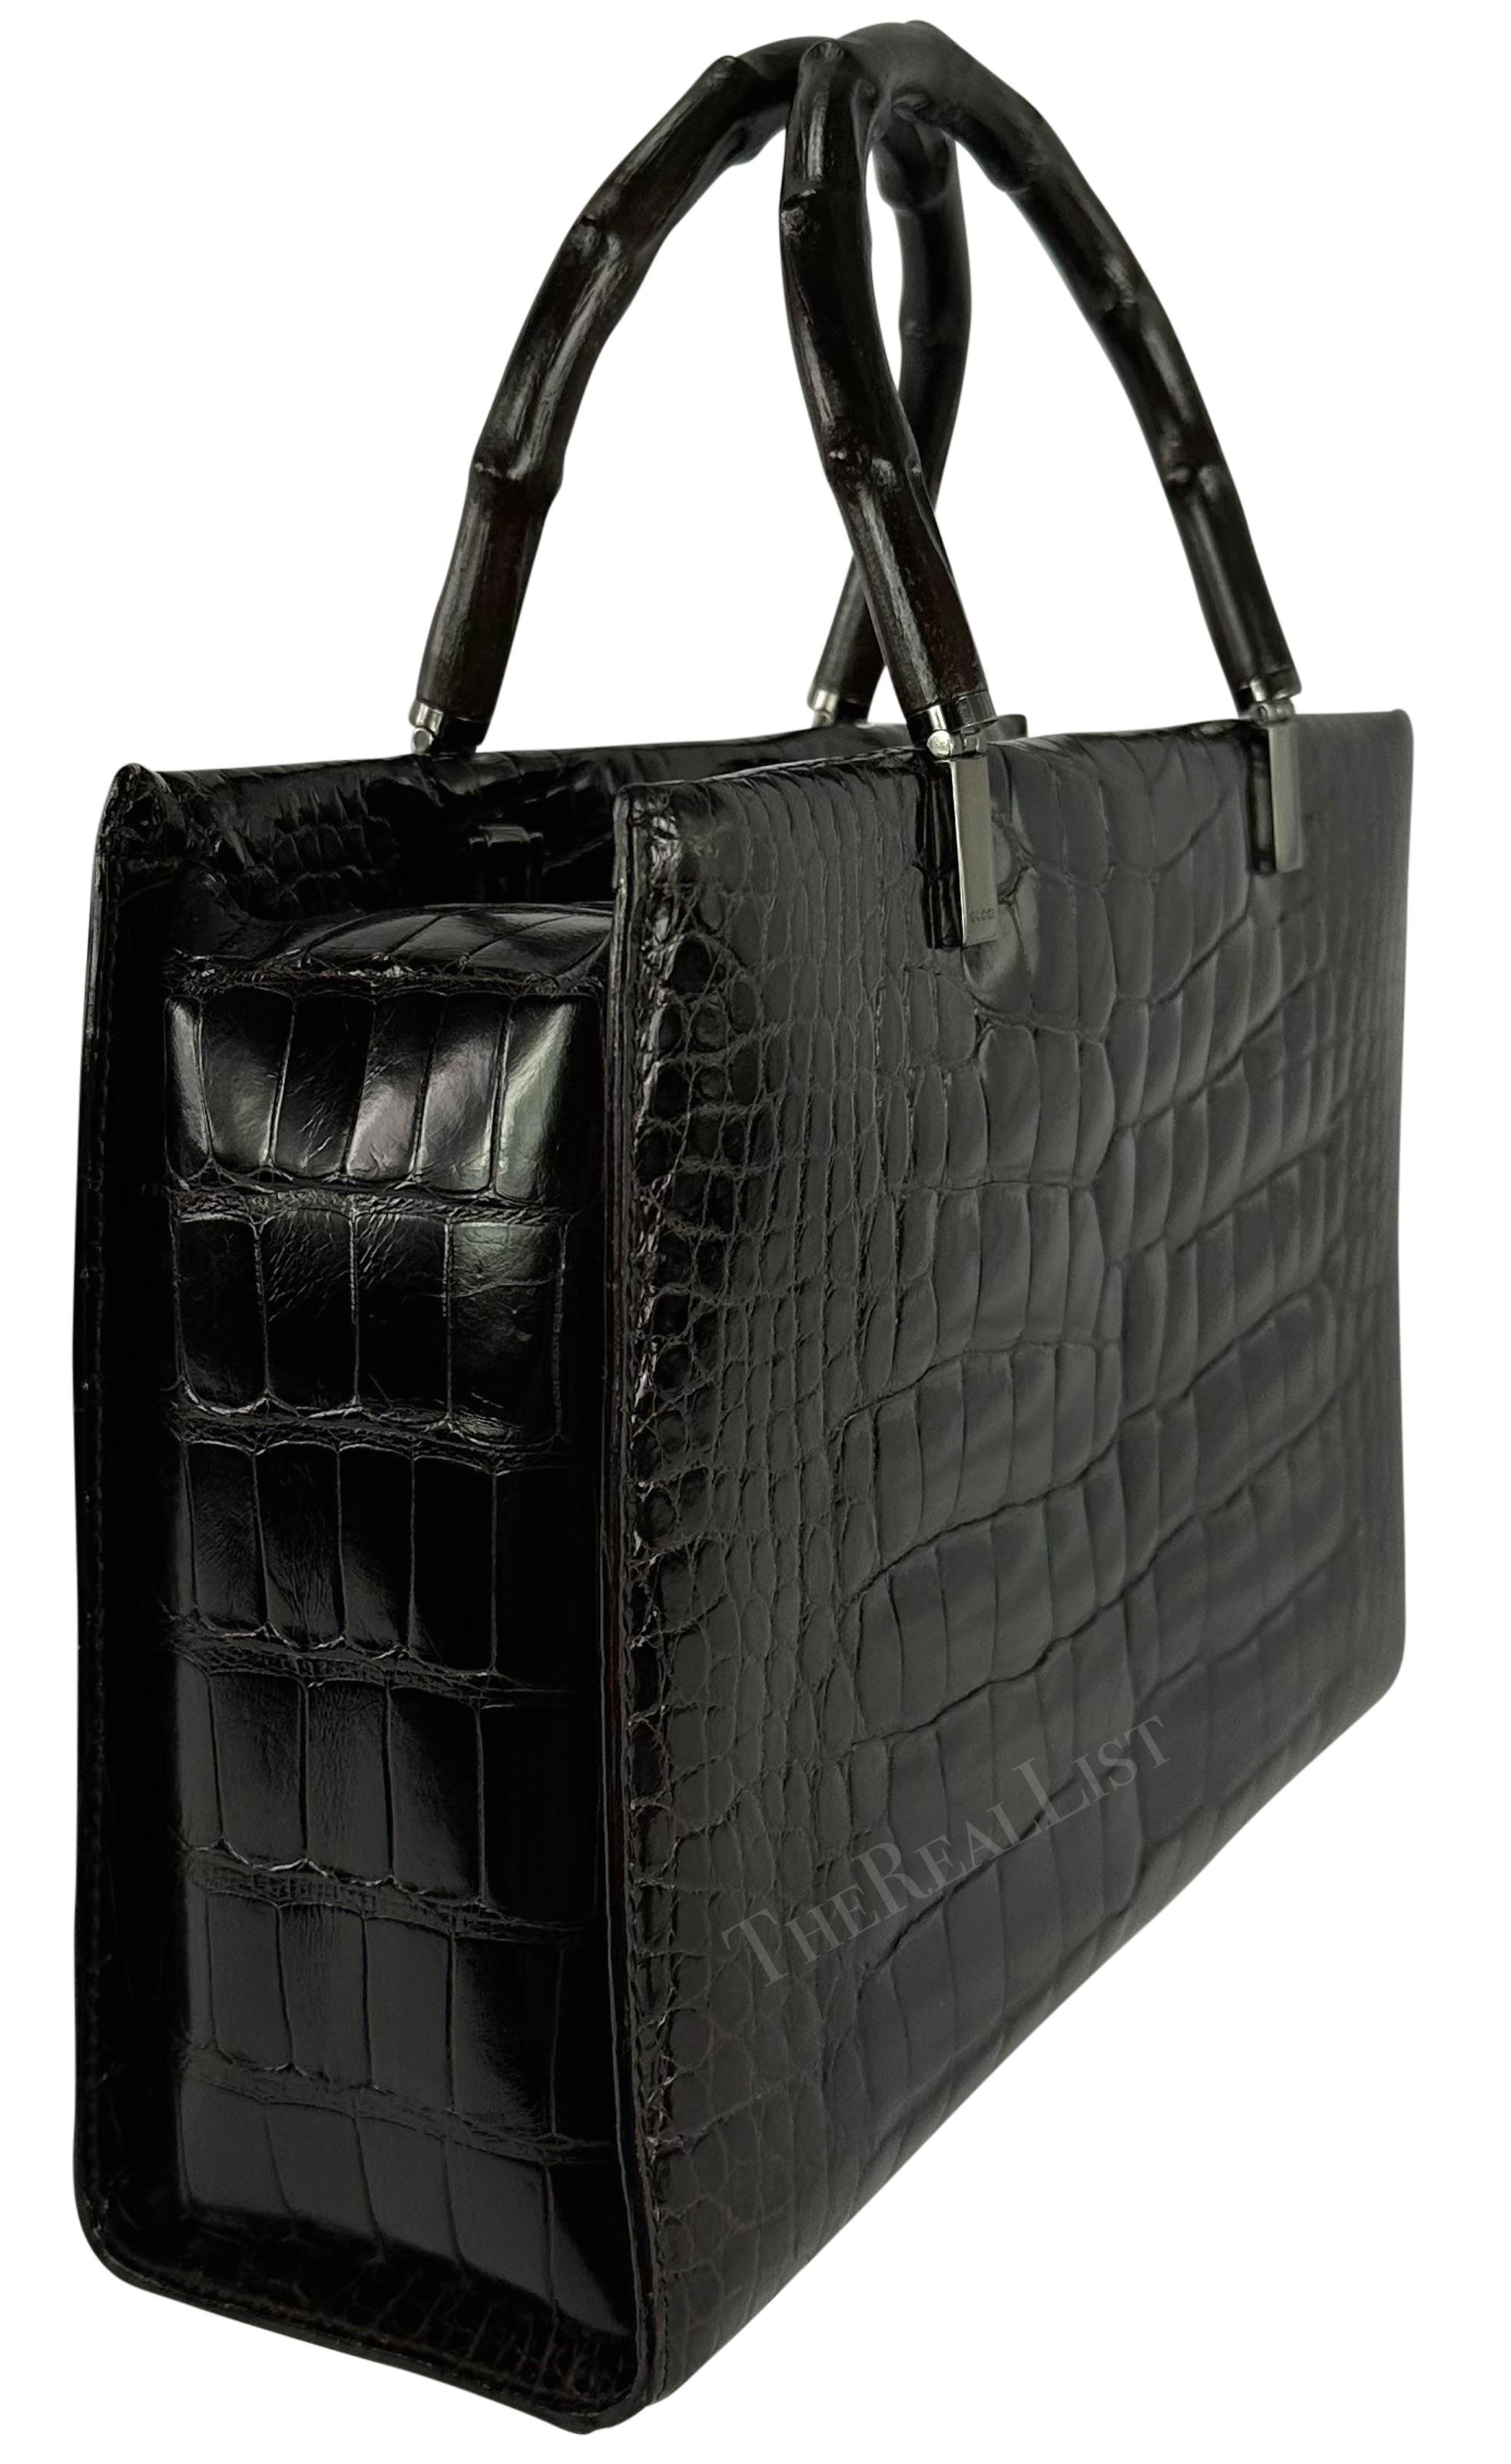 F/W 1998 Gucci by Tom Ford Ad Campaign Black Crocodile Bamboo Tote Bag  For Sale 4